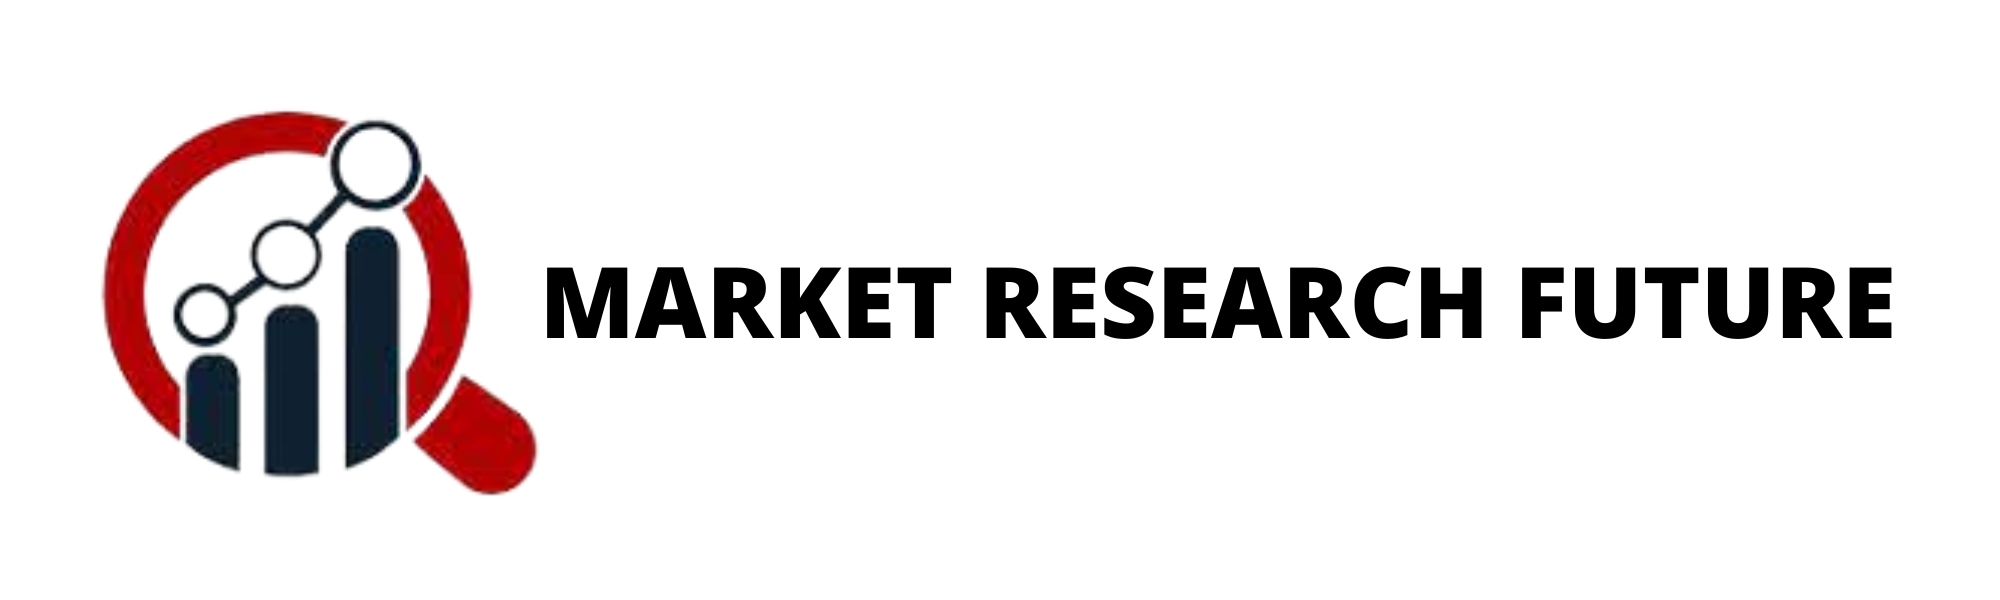 Green Cement Market Demand, Growth Analysis, Business...